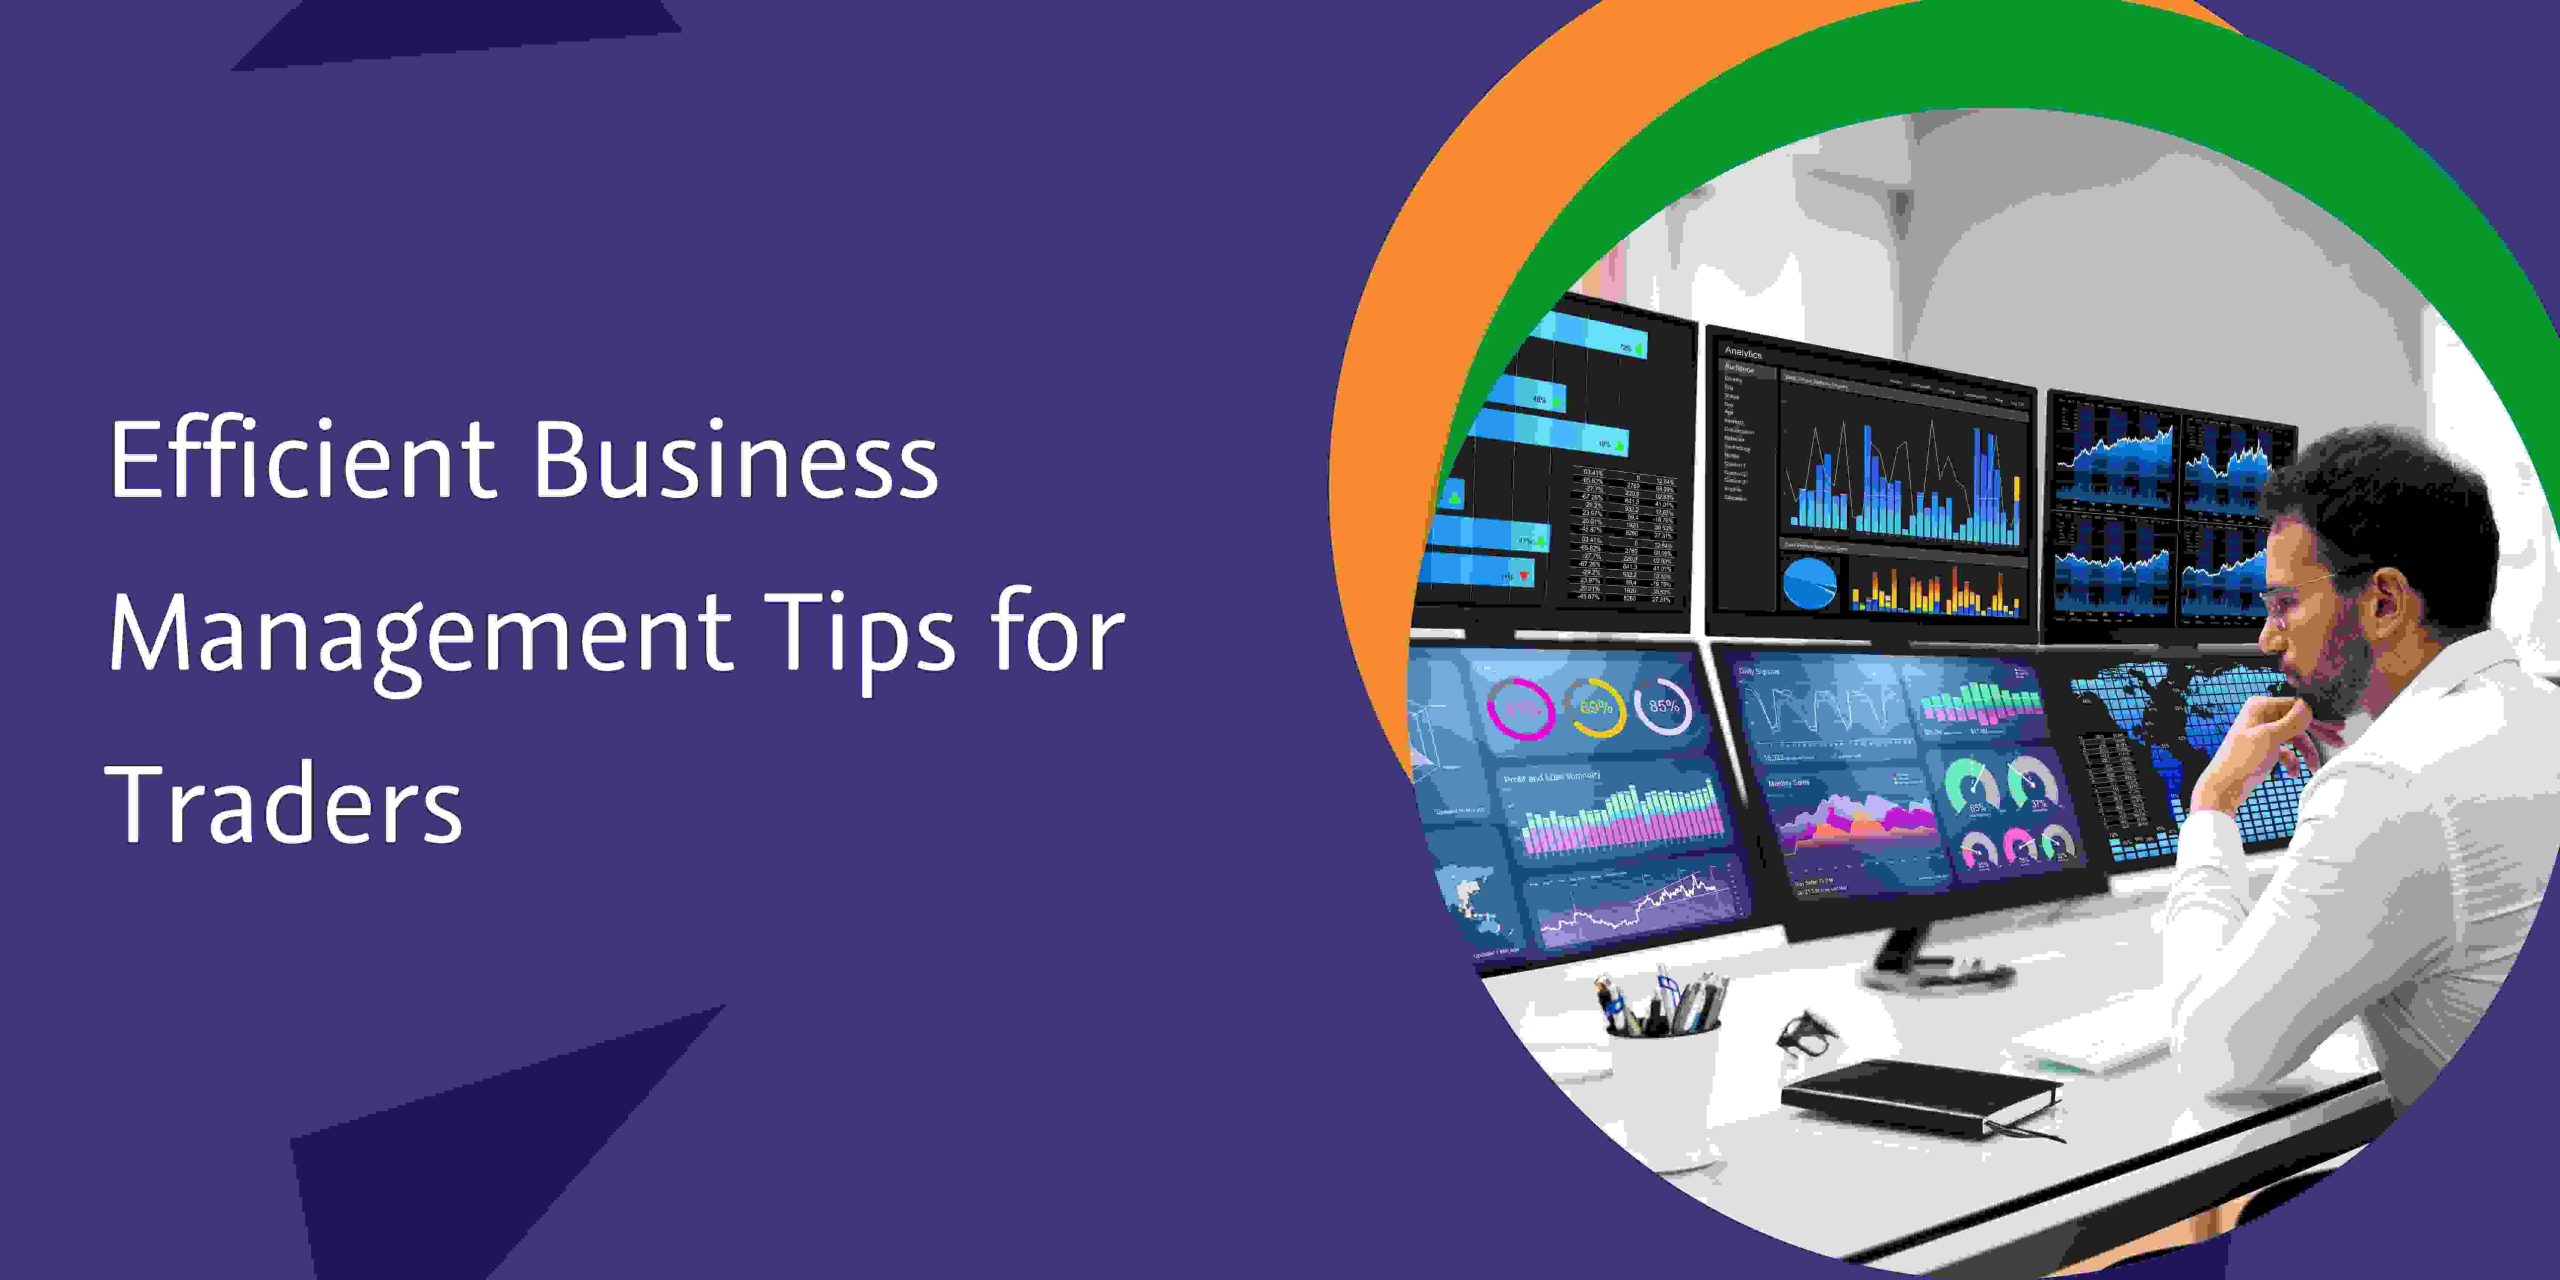 CaptainBiz: Efficient Business Management Tips for Traders